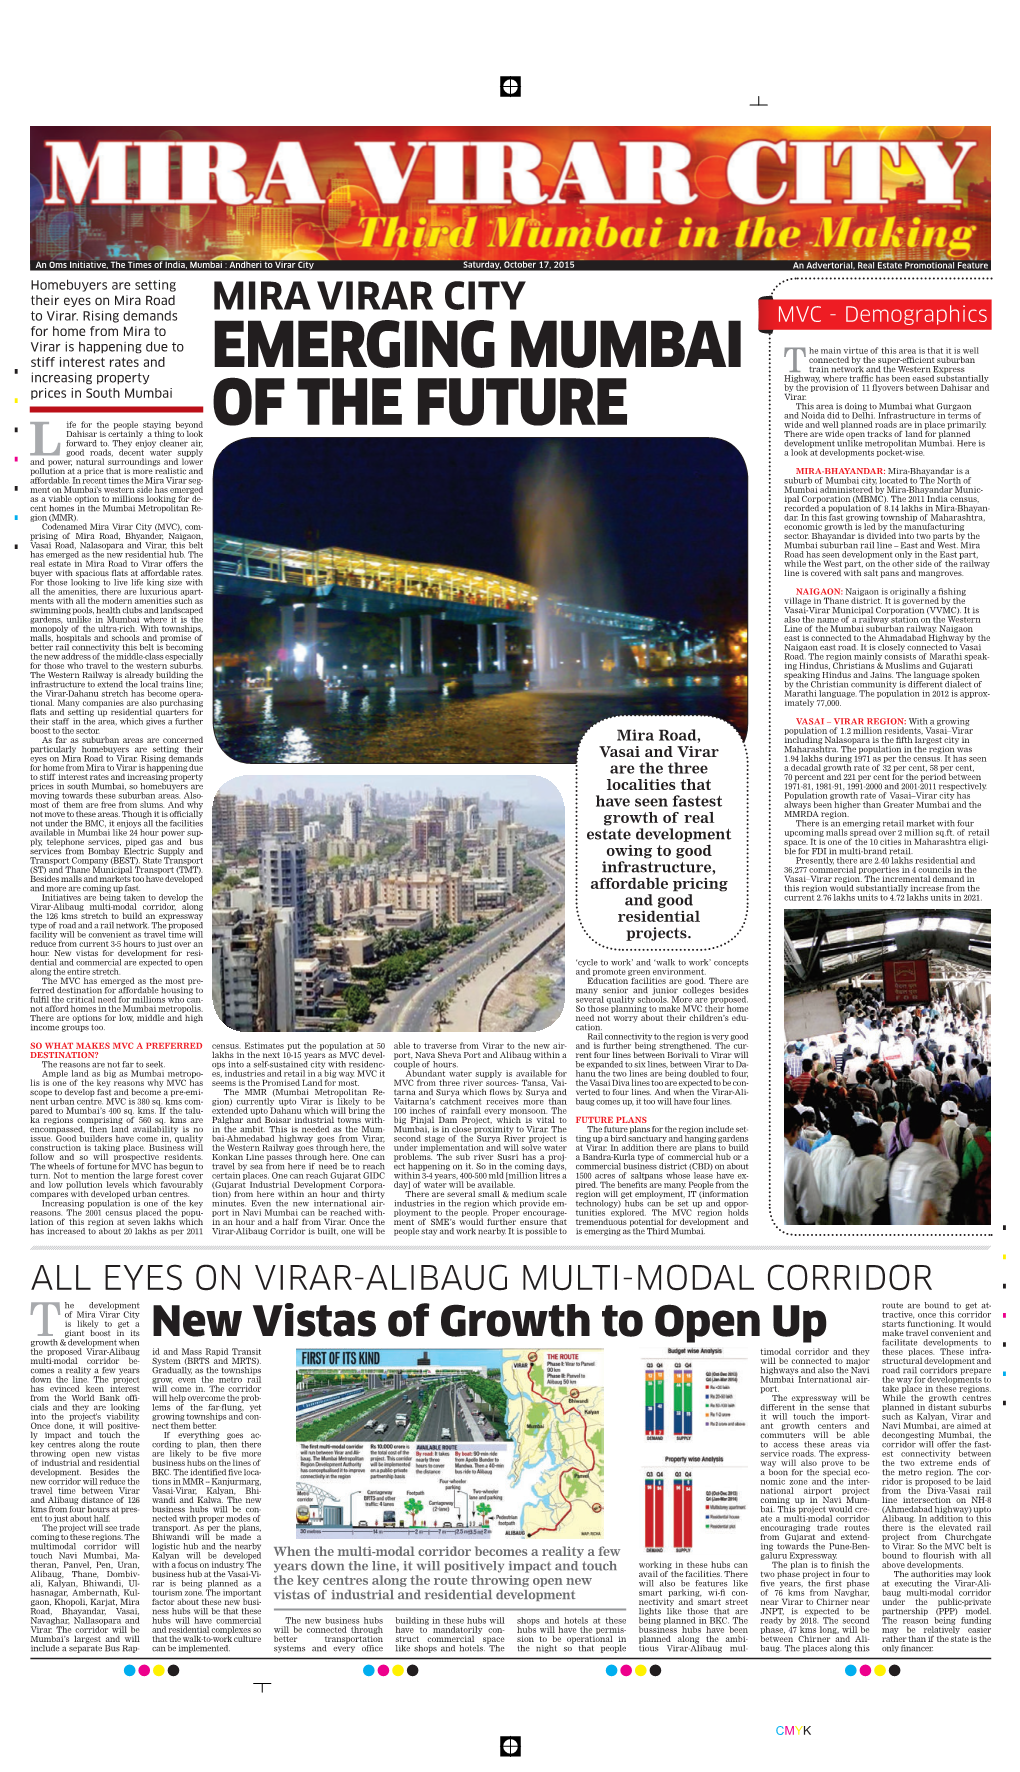 Emerging Mumbai of the Future